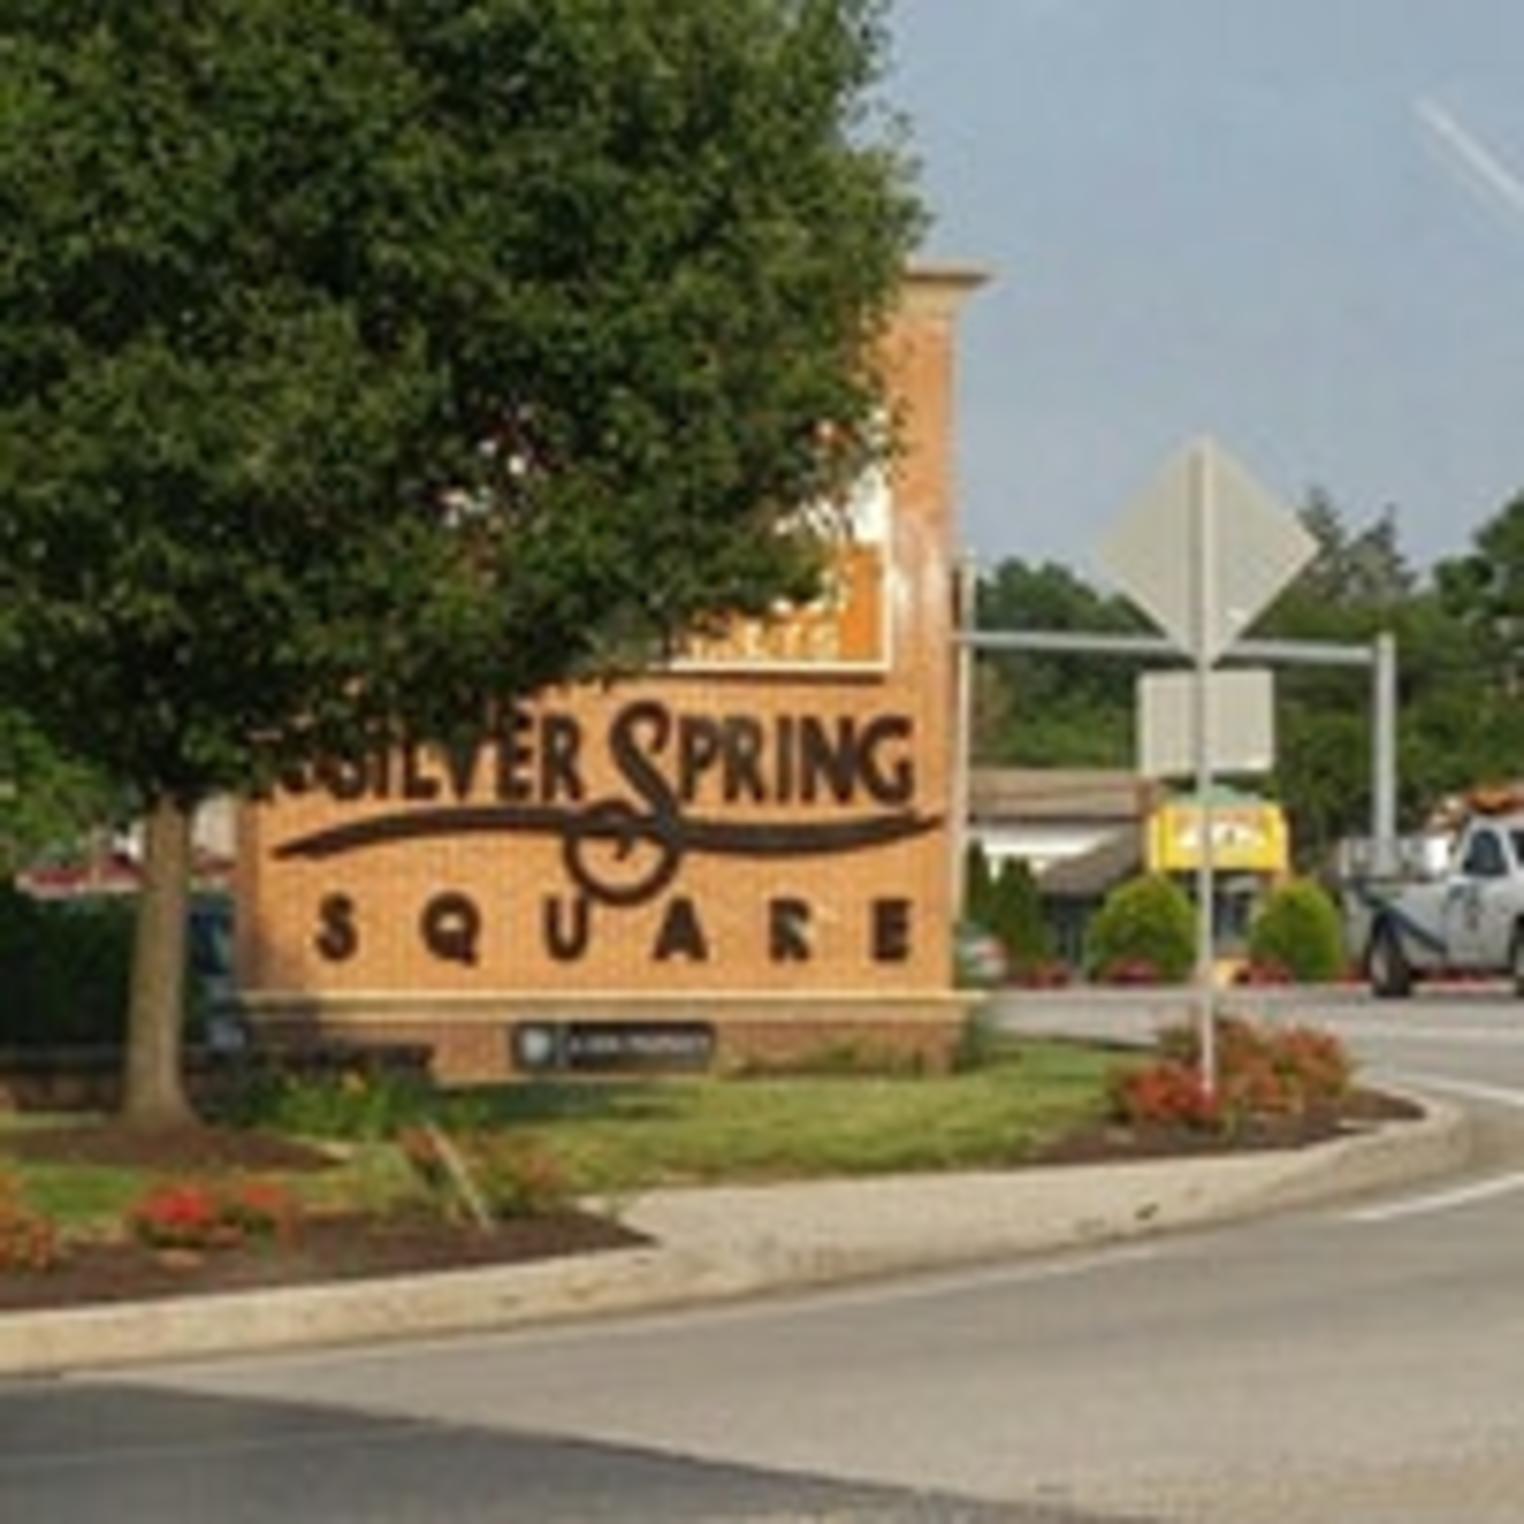 Silver Spring Square